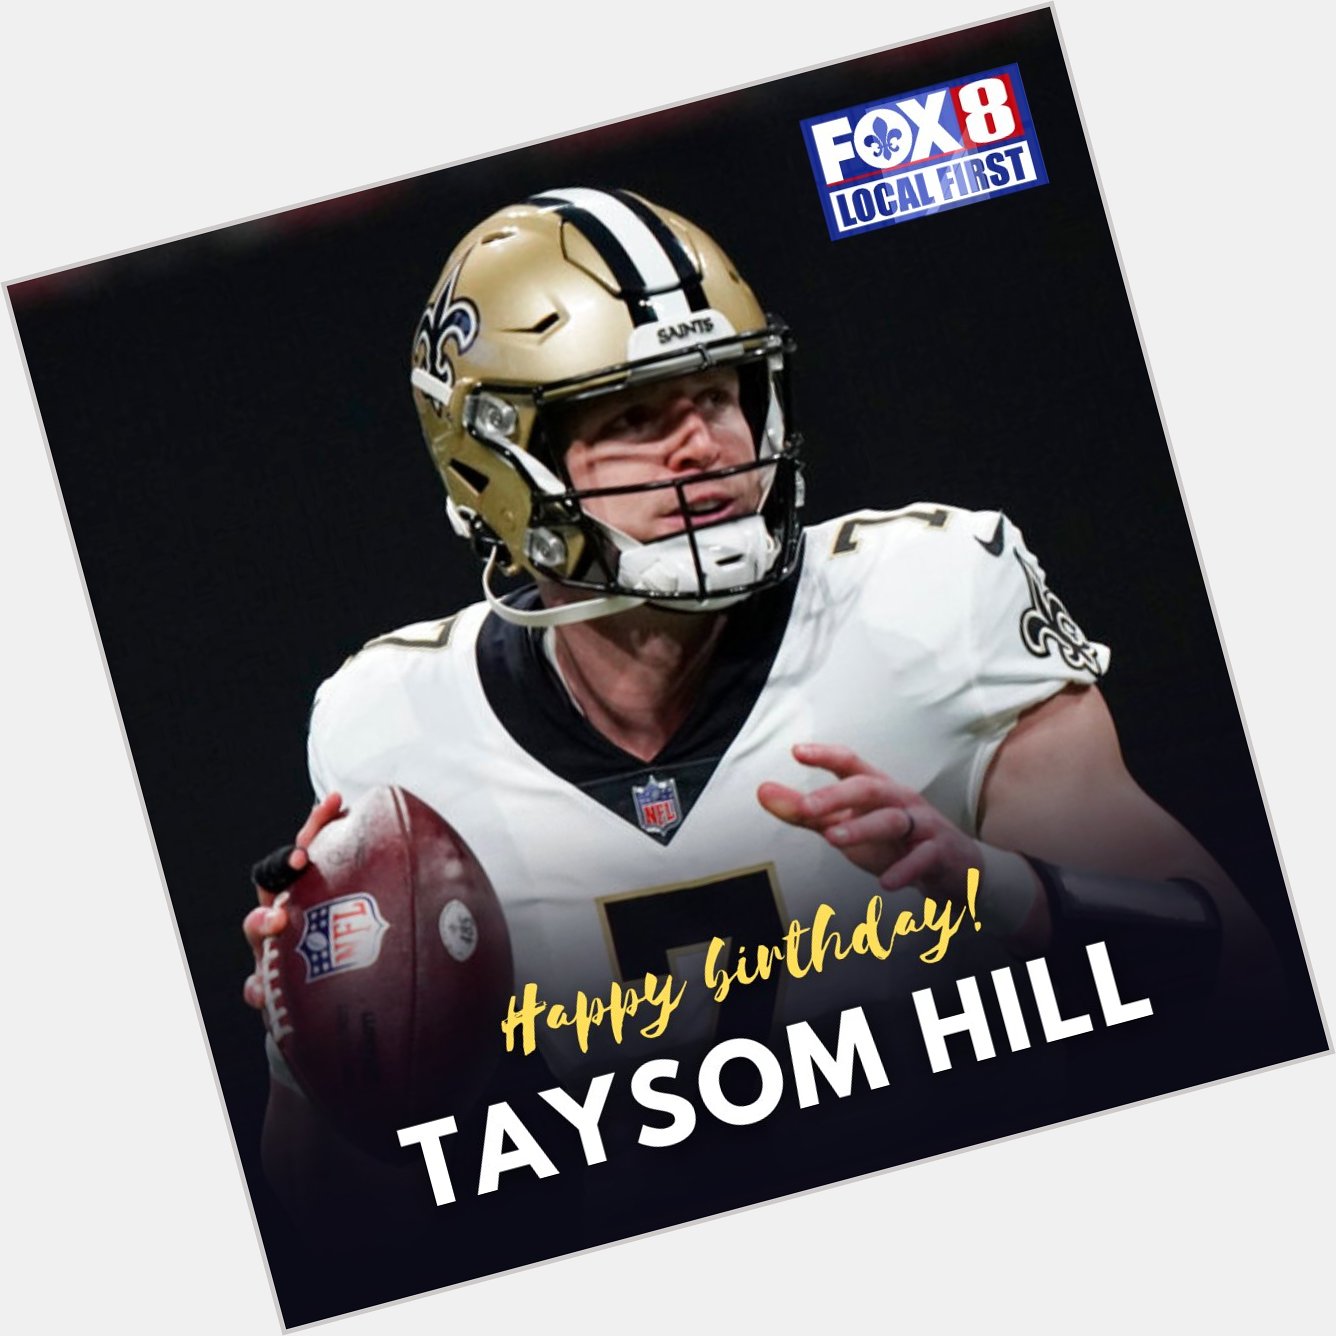 His position? Football.
Happy birthday, Taysom Hill! 